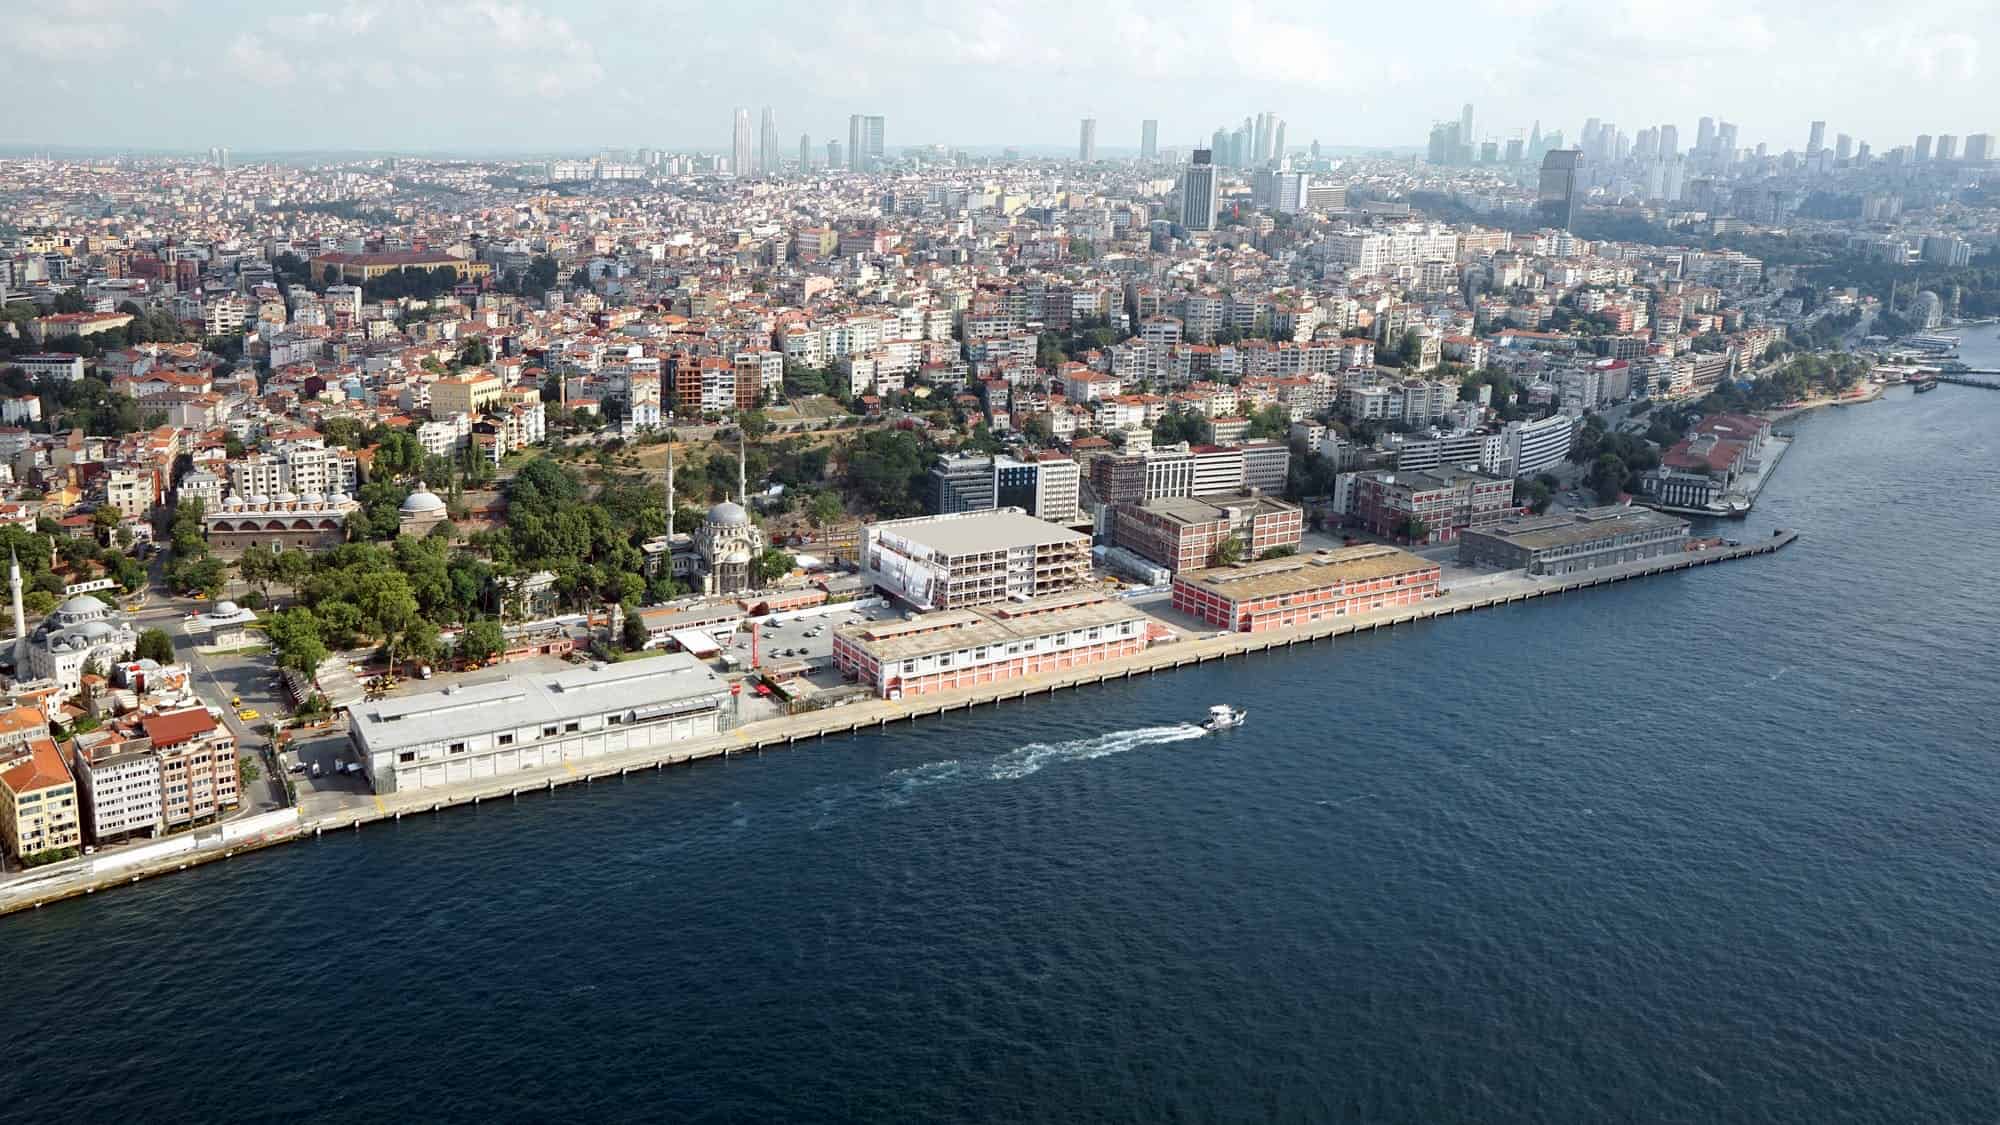 Galataport Istanbul